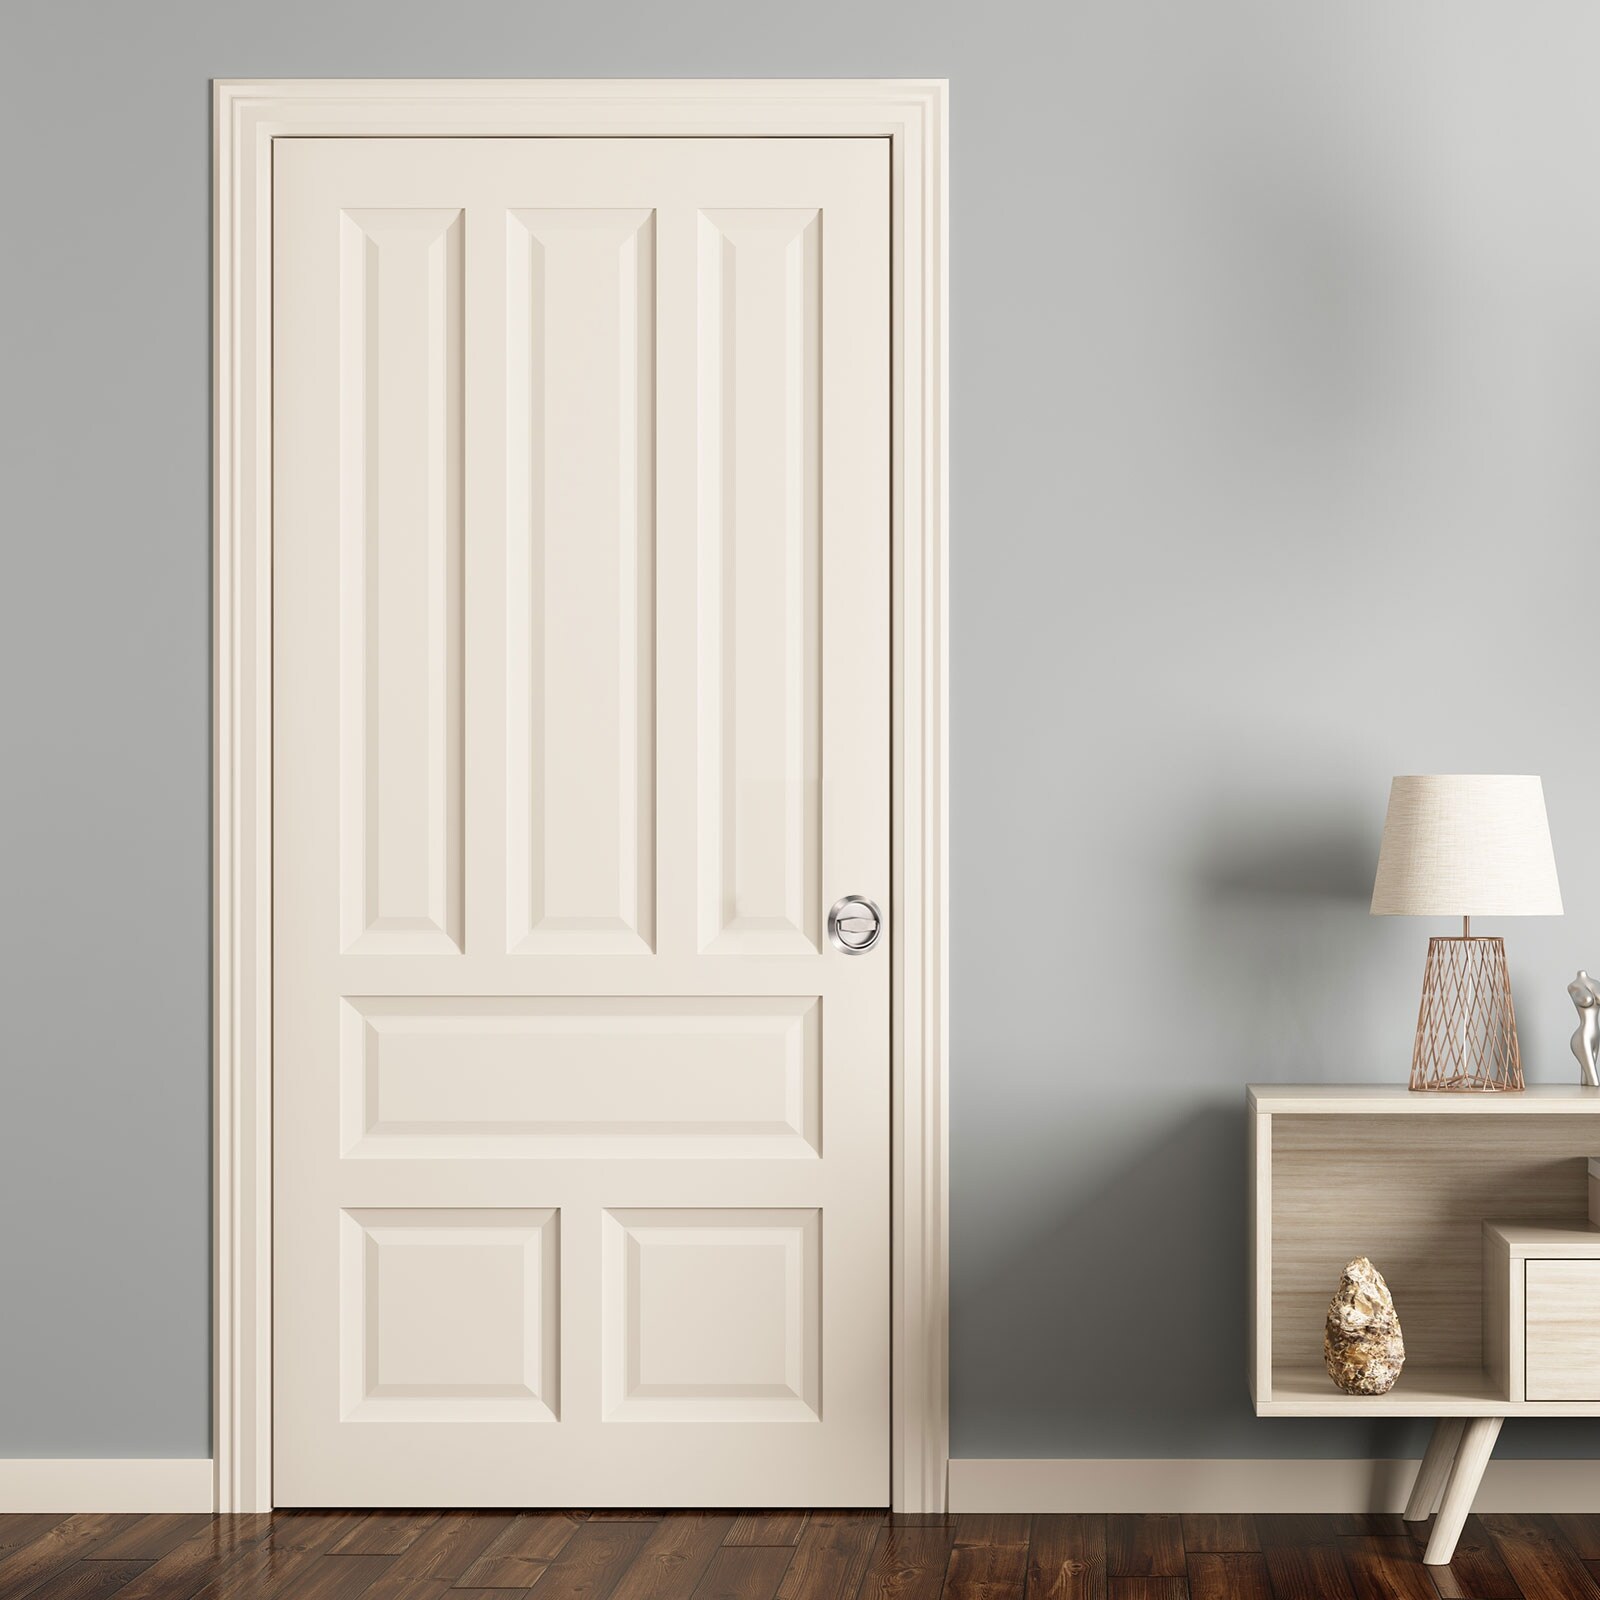 Privacy Bedroom Door Lock Recessed Pull Handles Recessed Closet Lock  Stainless